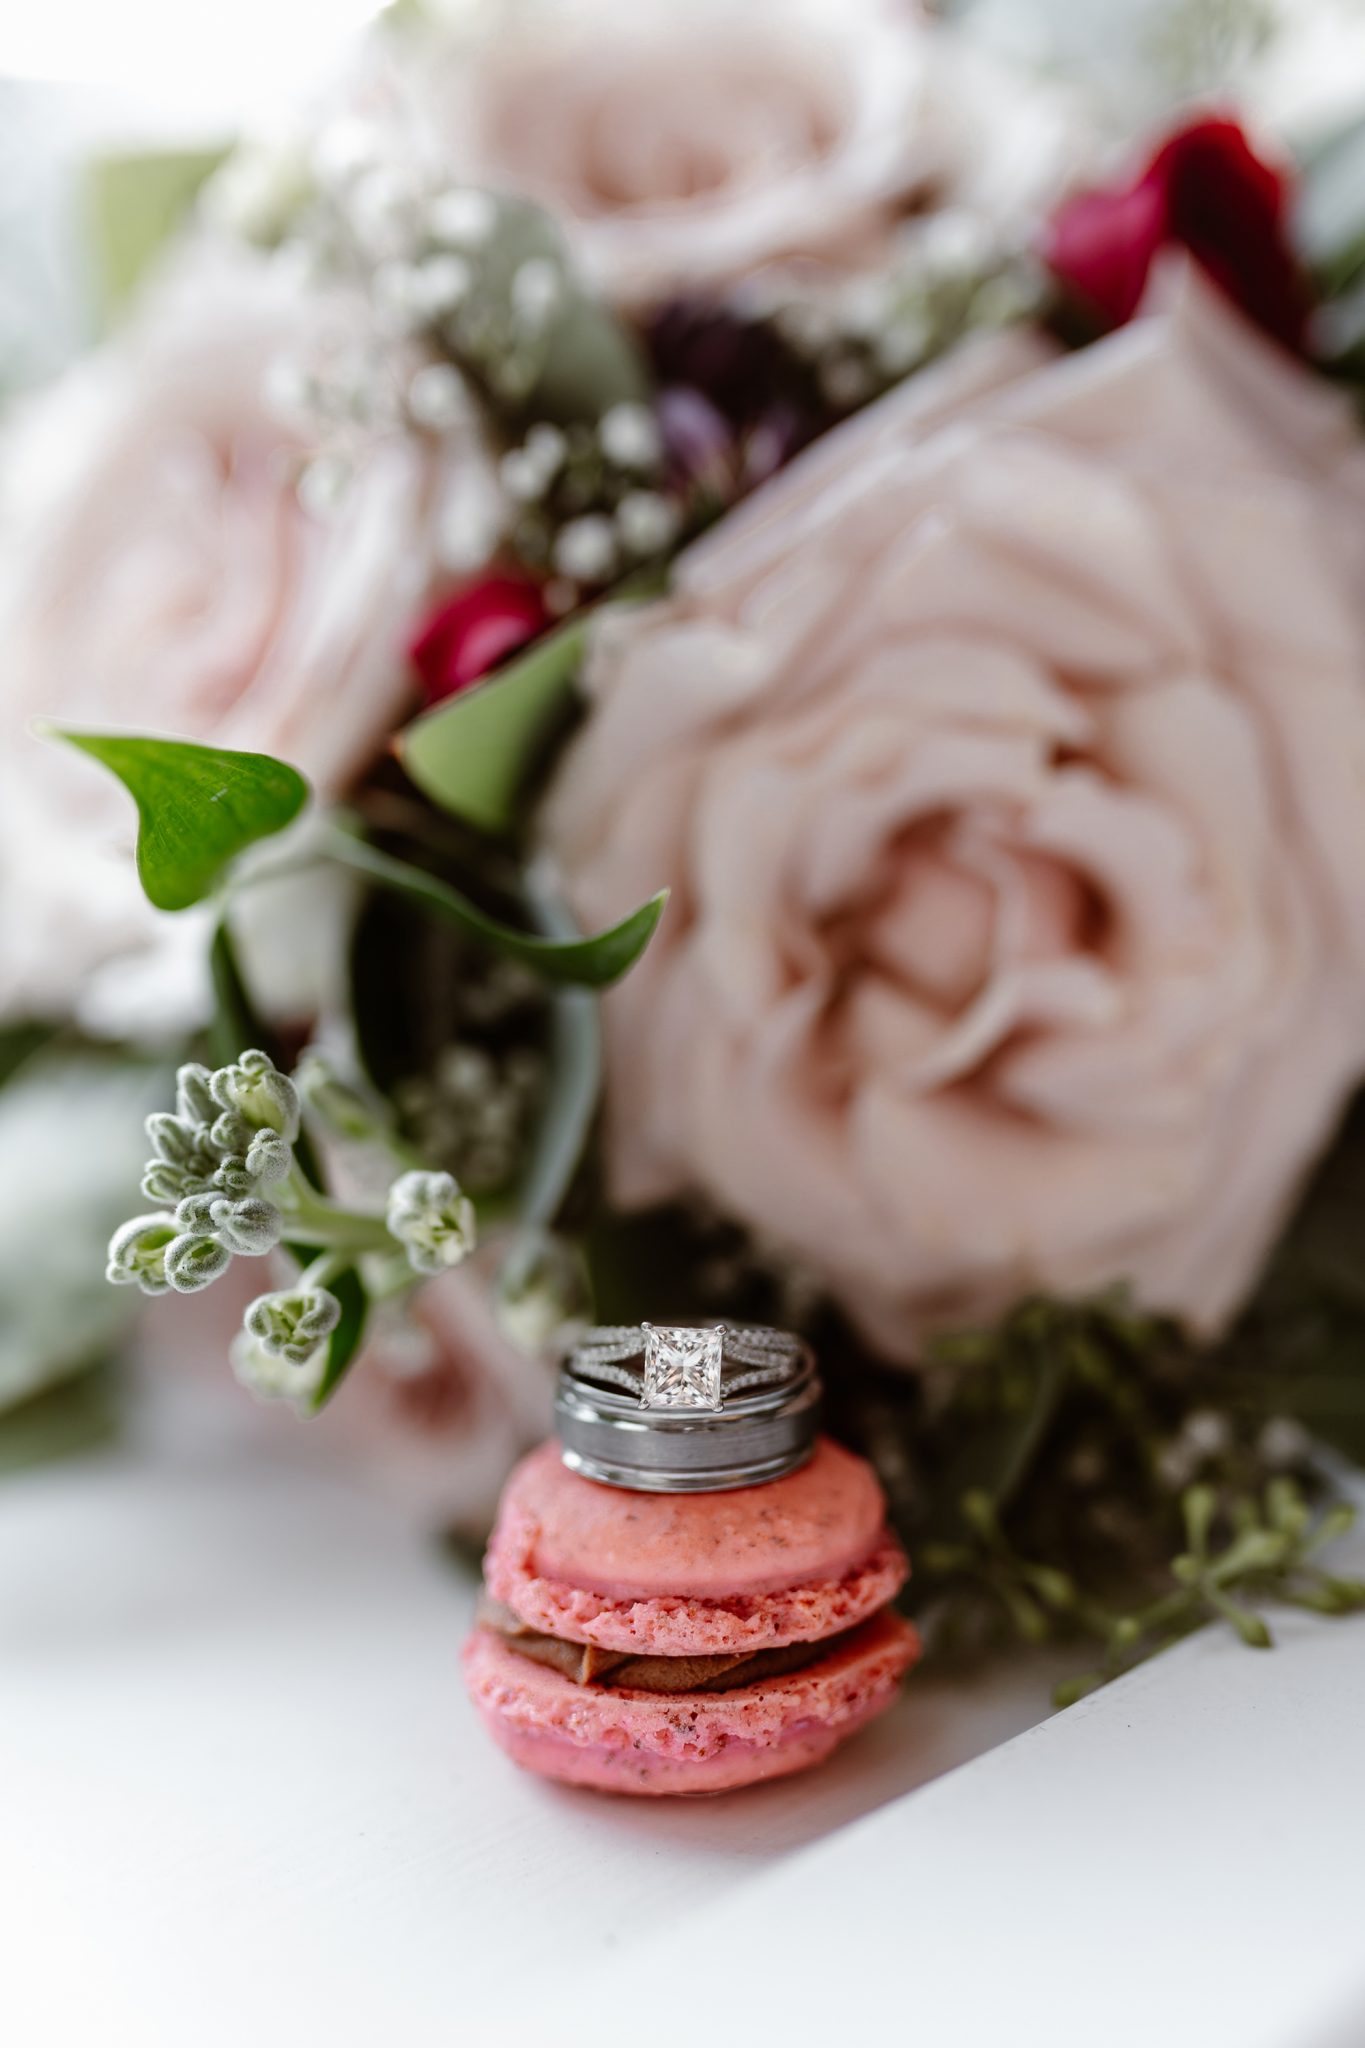 Downsized Covid 19 wedding at Chateau Lake Louise - macarons, wedding desserts, engagement ring